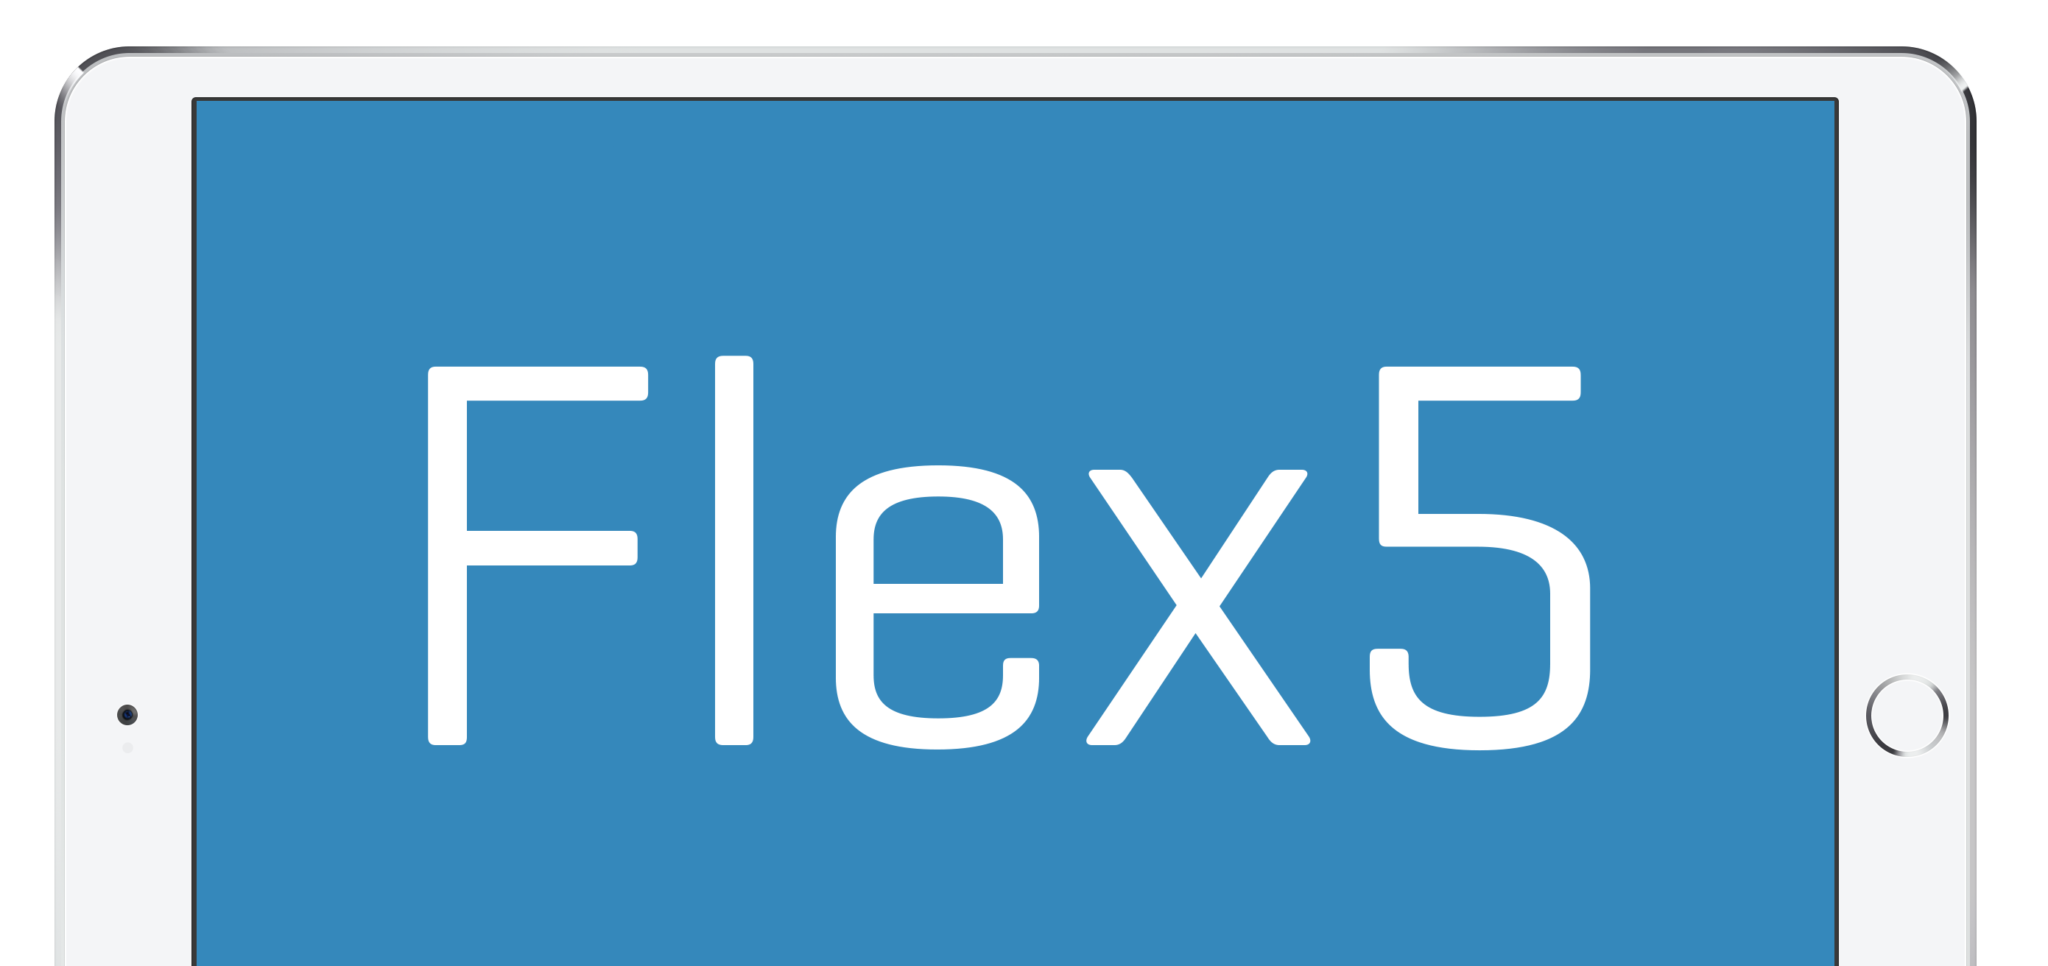 flex5-ipad